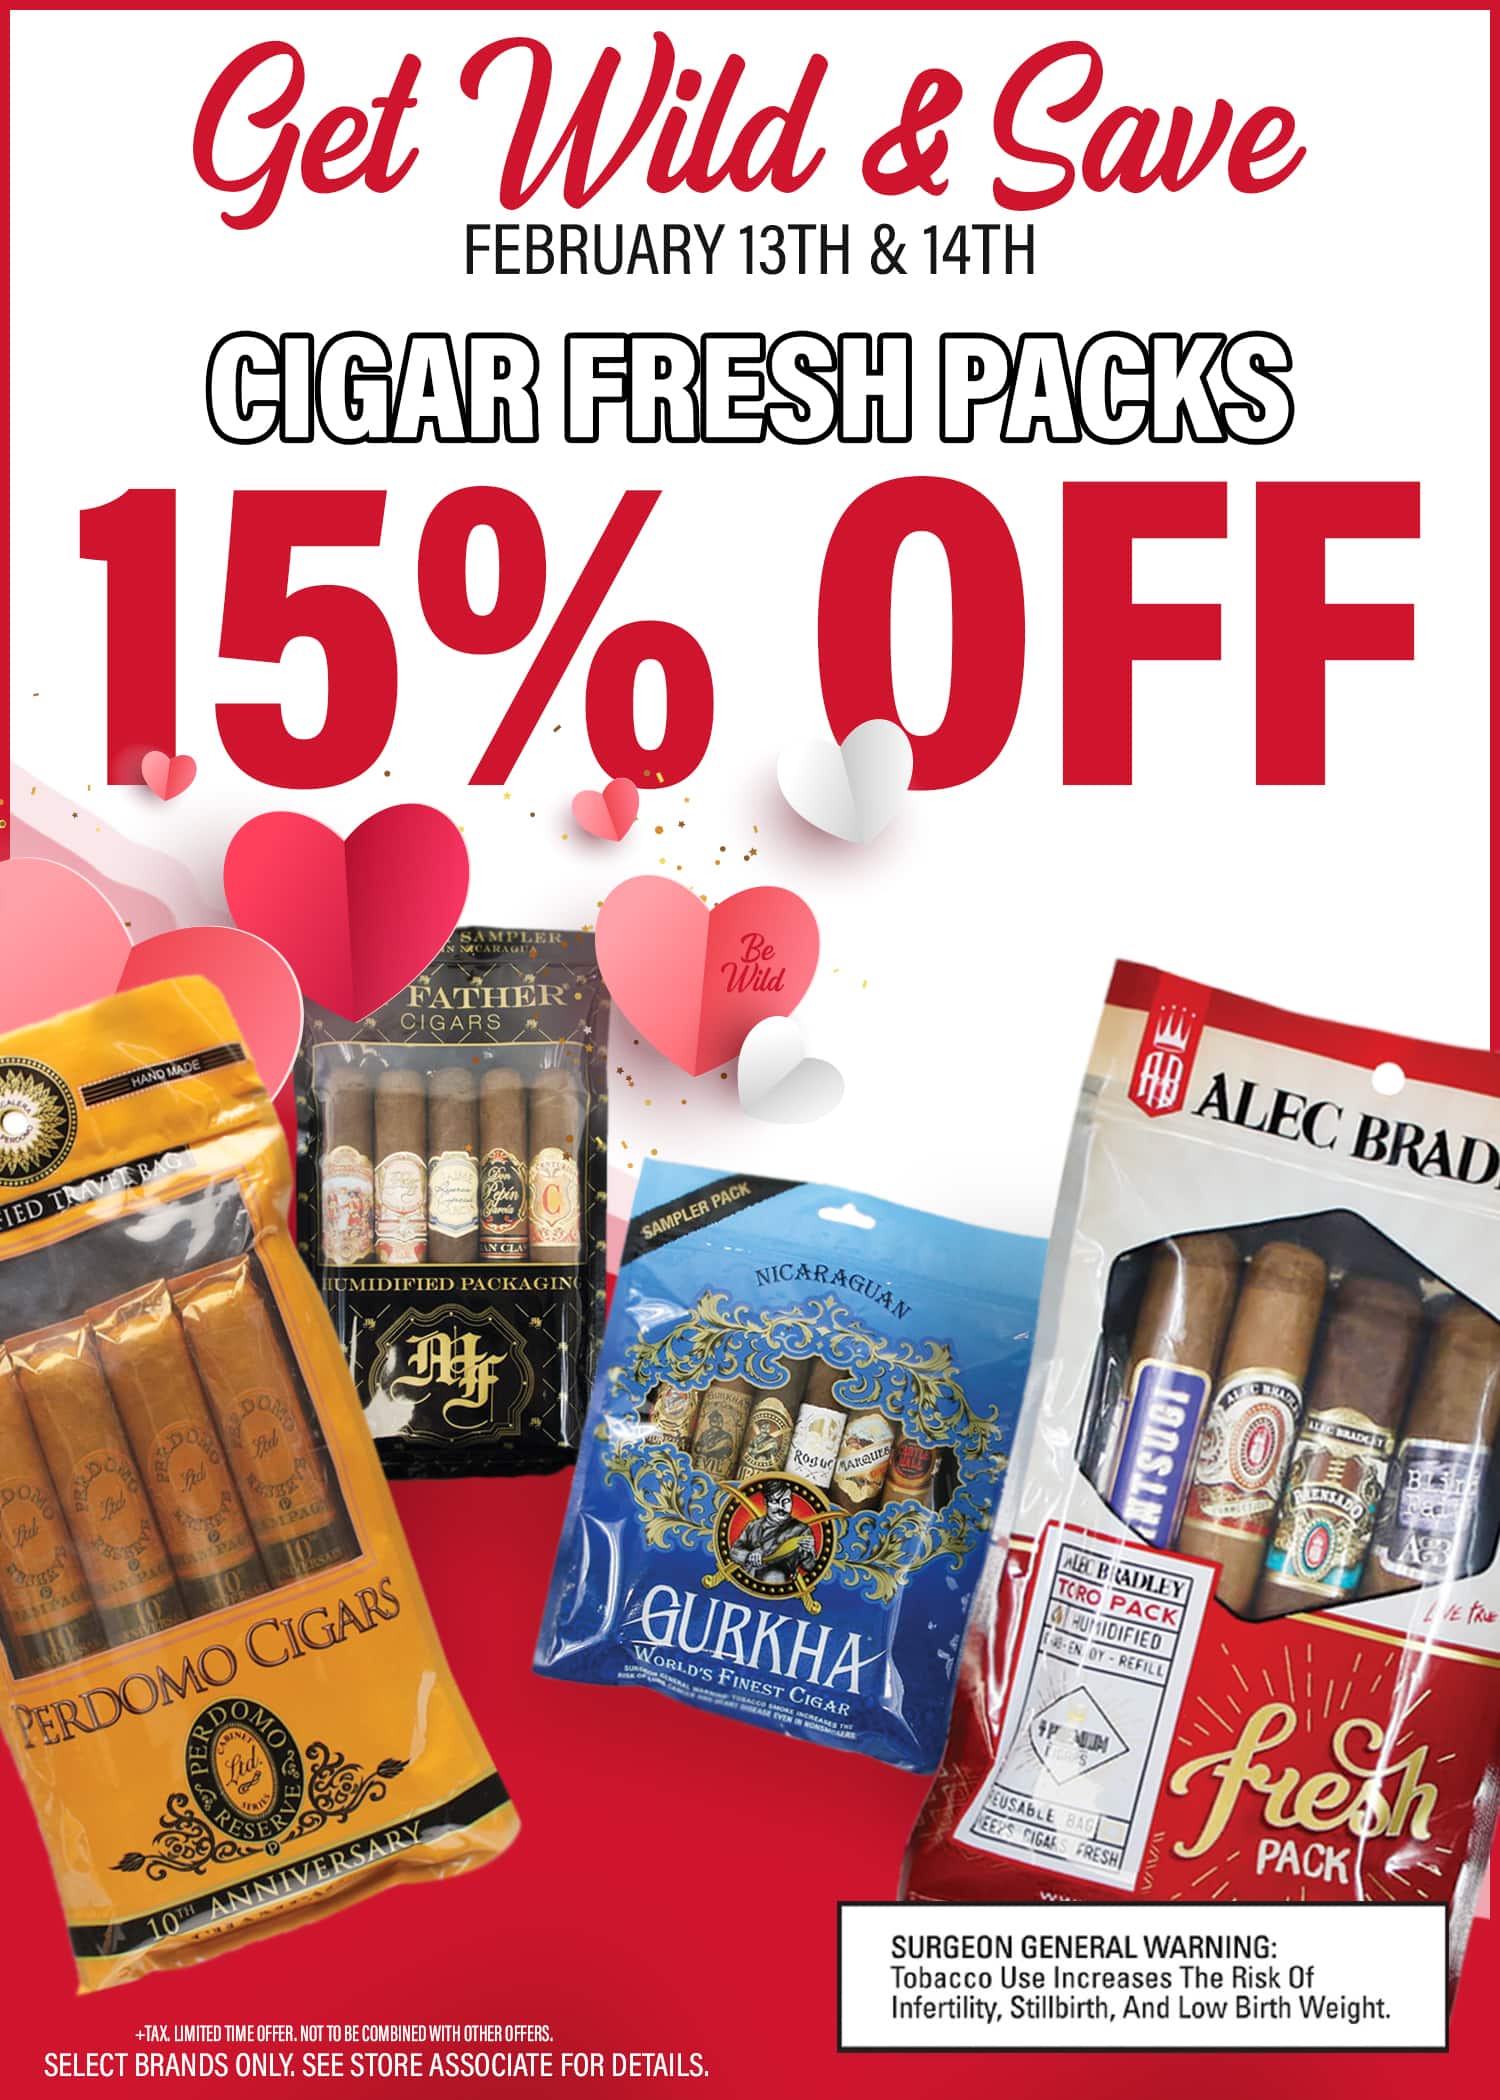 Get Wild & Save - Cigar Fresh Packs 15% Off